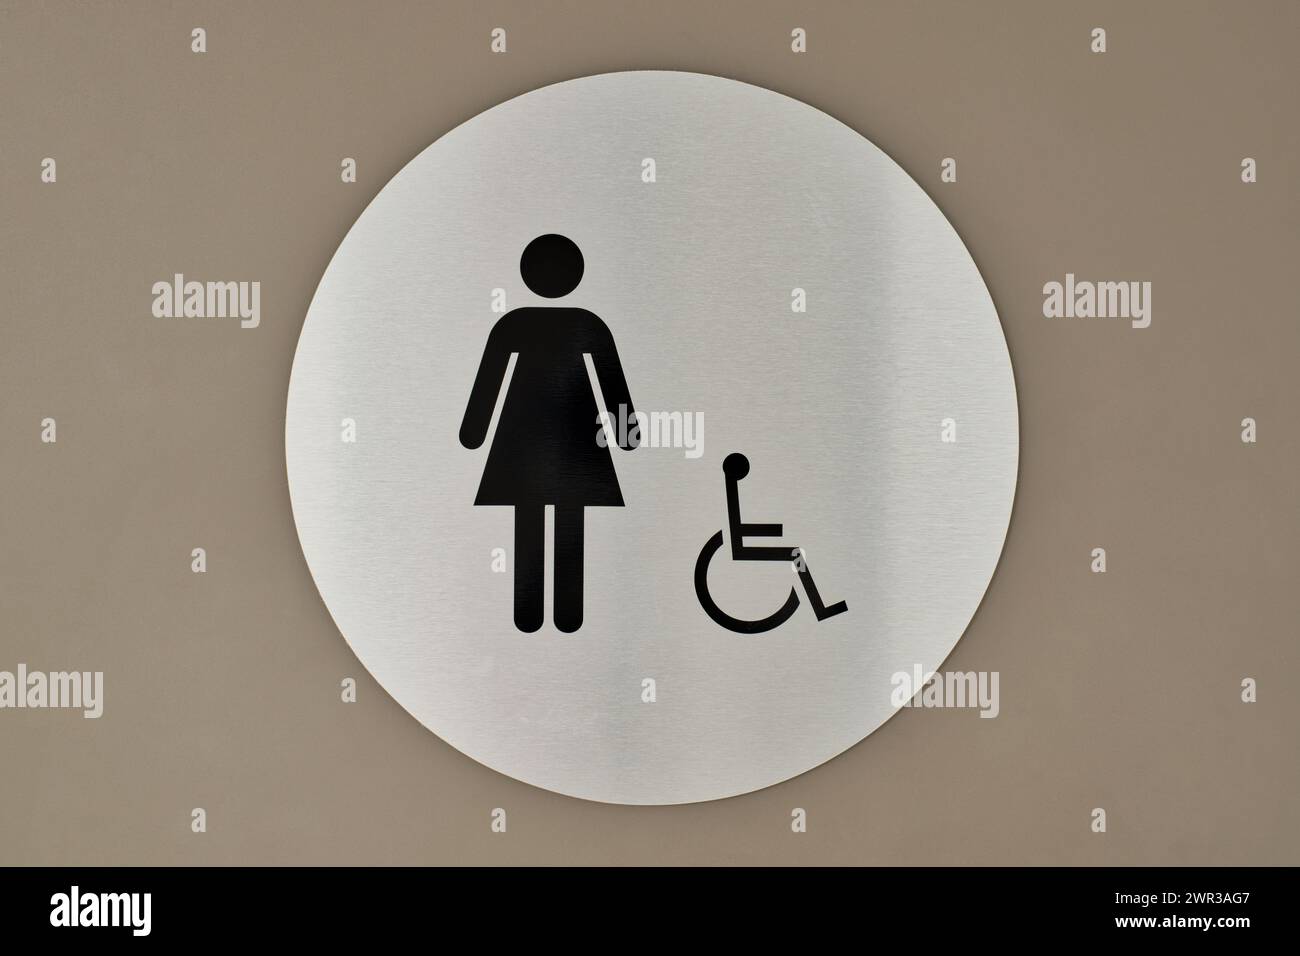 Women's bathroom and handicap sign on a door. Circular sign and symbol designation placard. Stock Photo